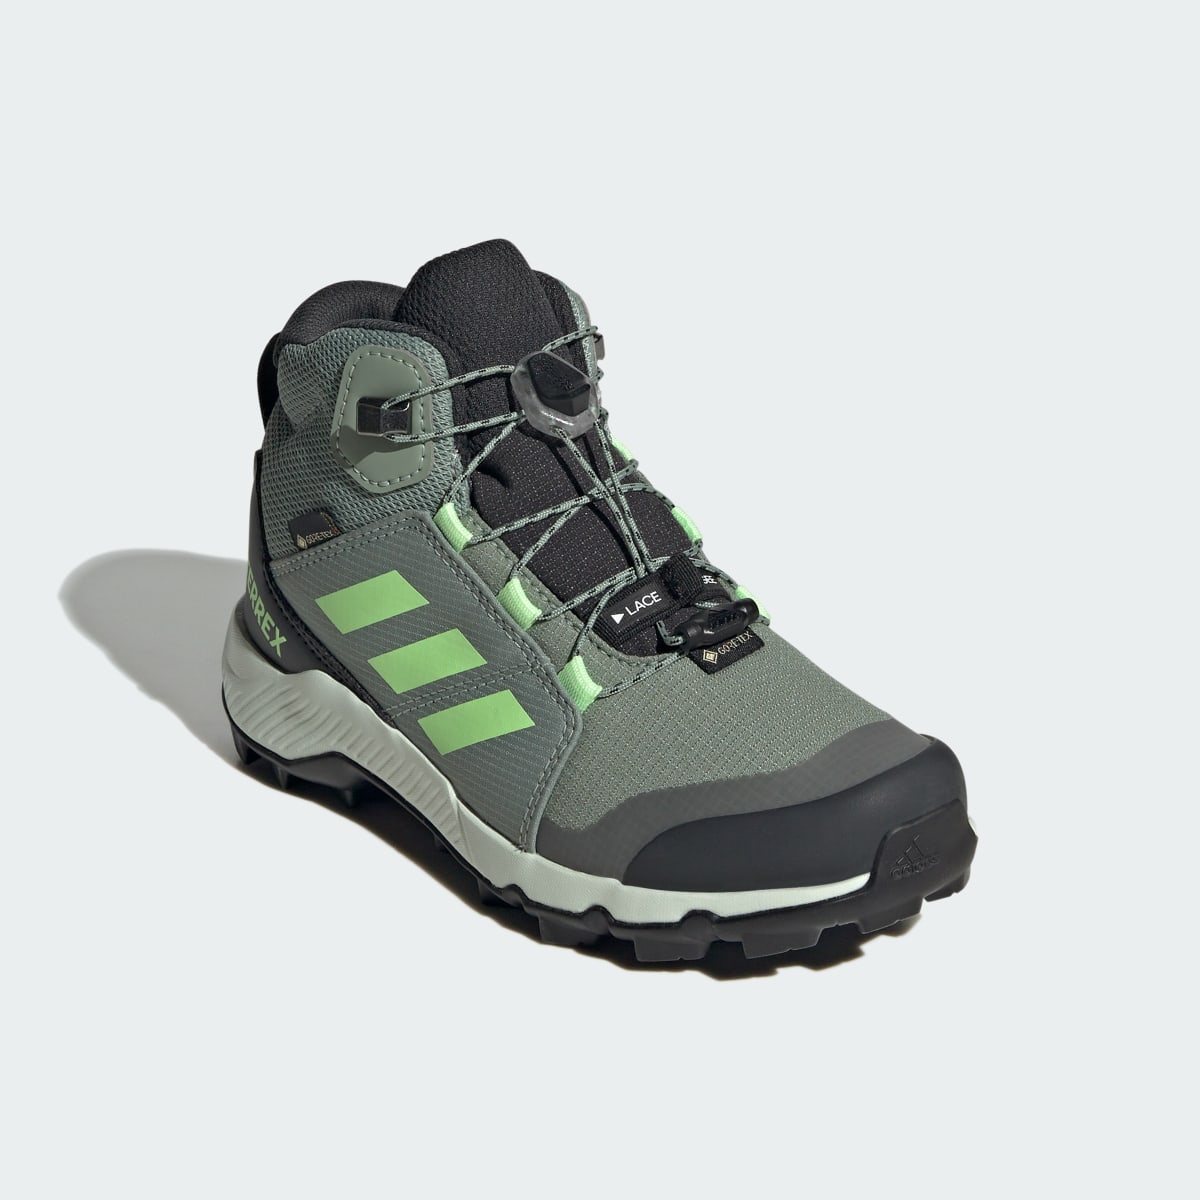 Adidas Chaussure de randonnée Organizer Mid GORE-TEX. 5